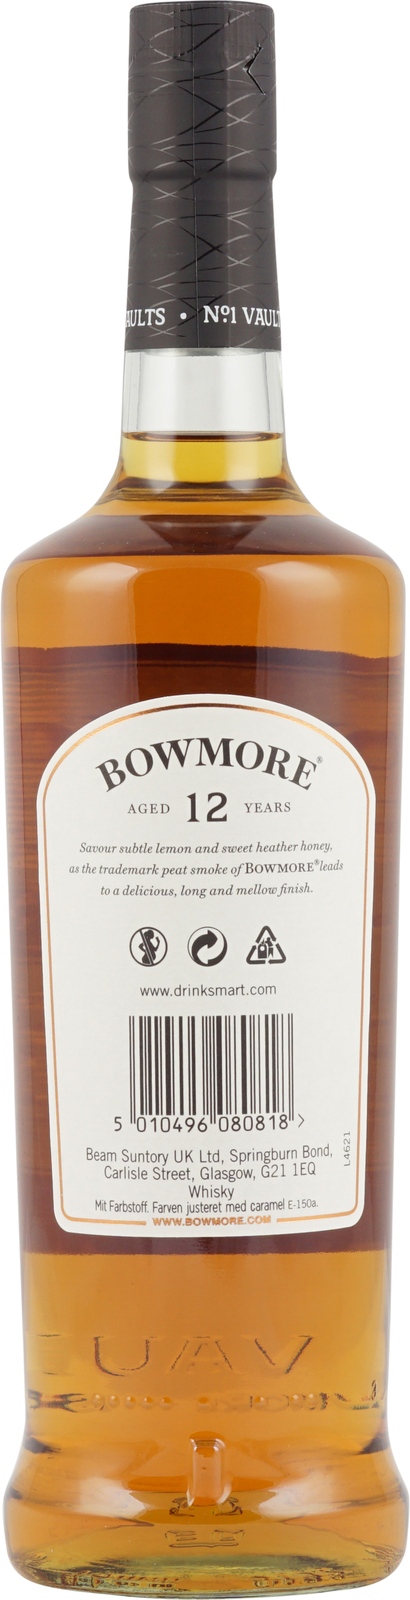 Bowmore Islay Single Malt Whisky Jahre) i (12 Liter 0,7